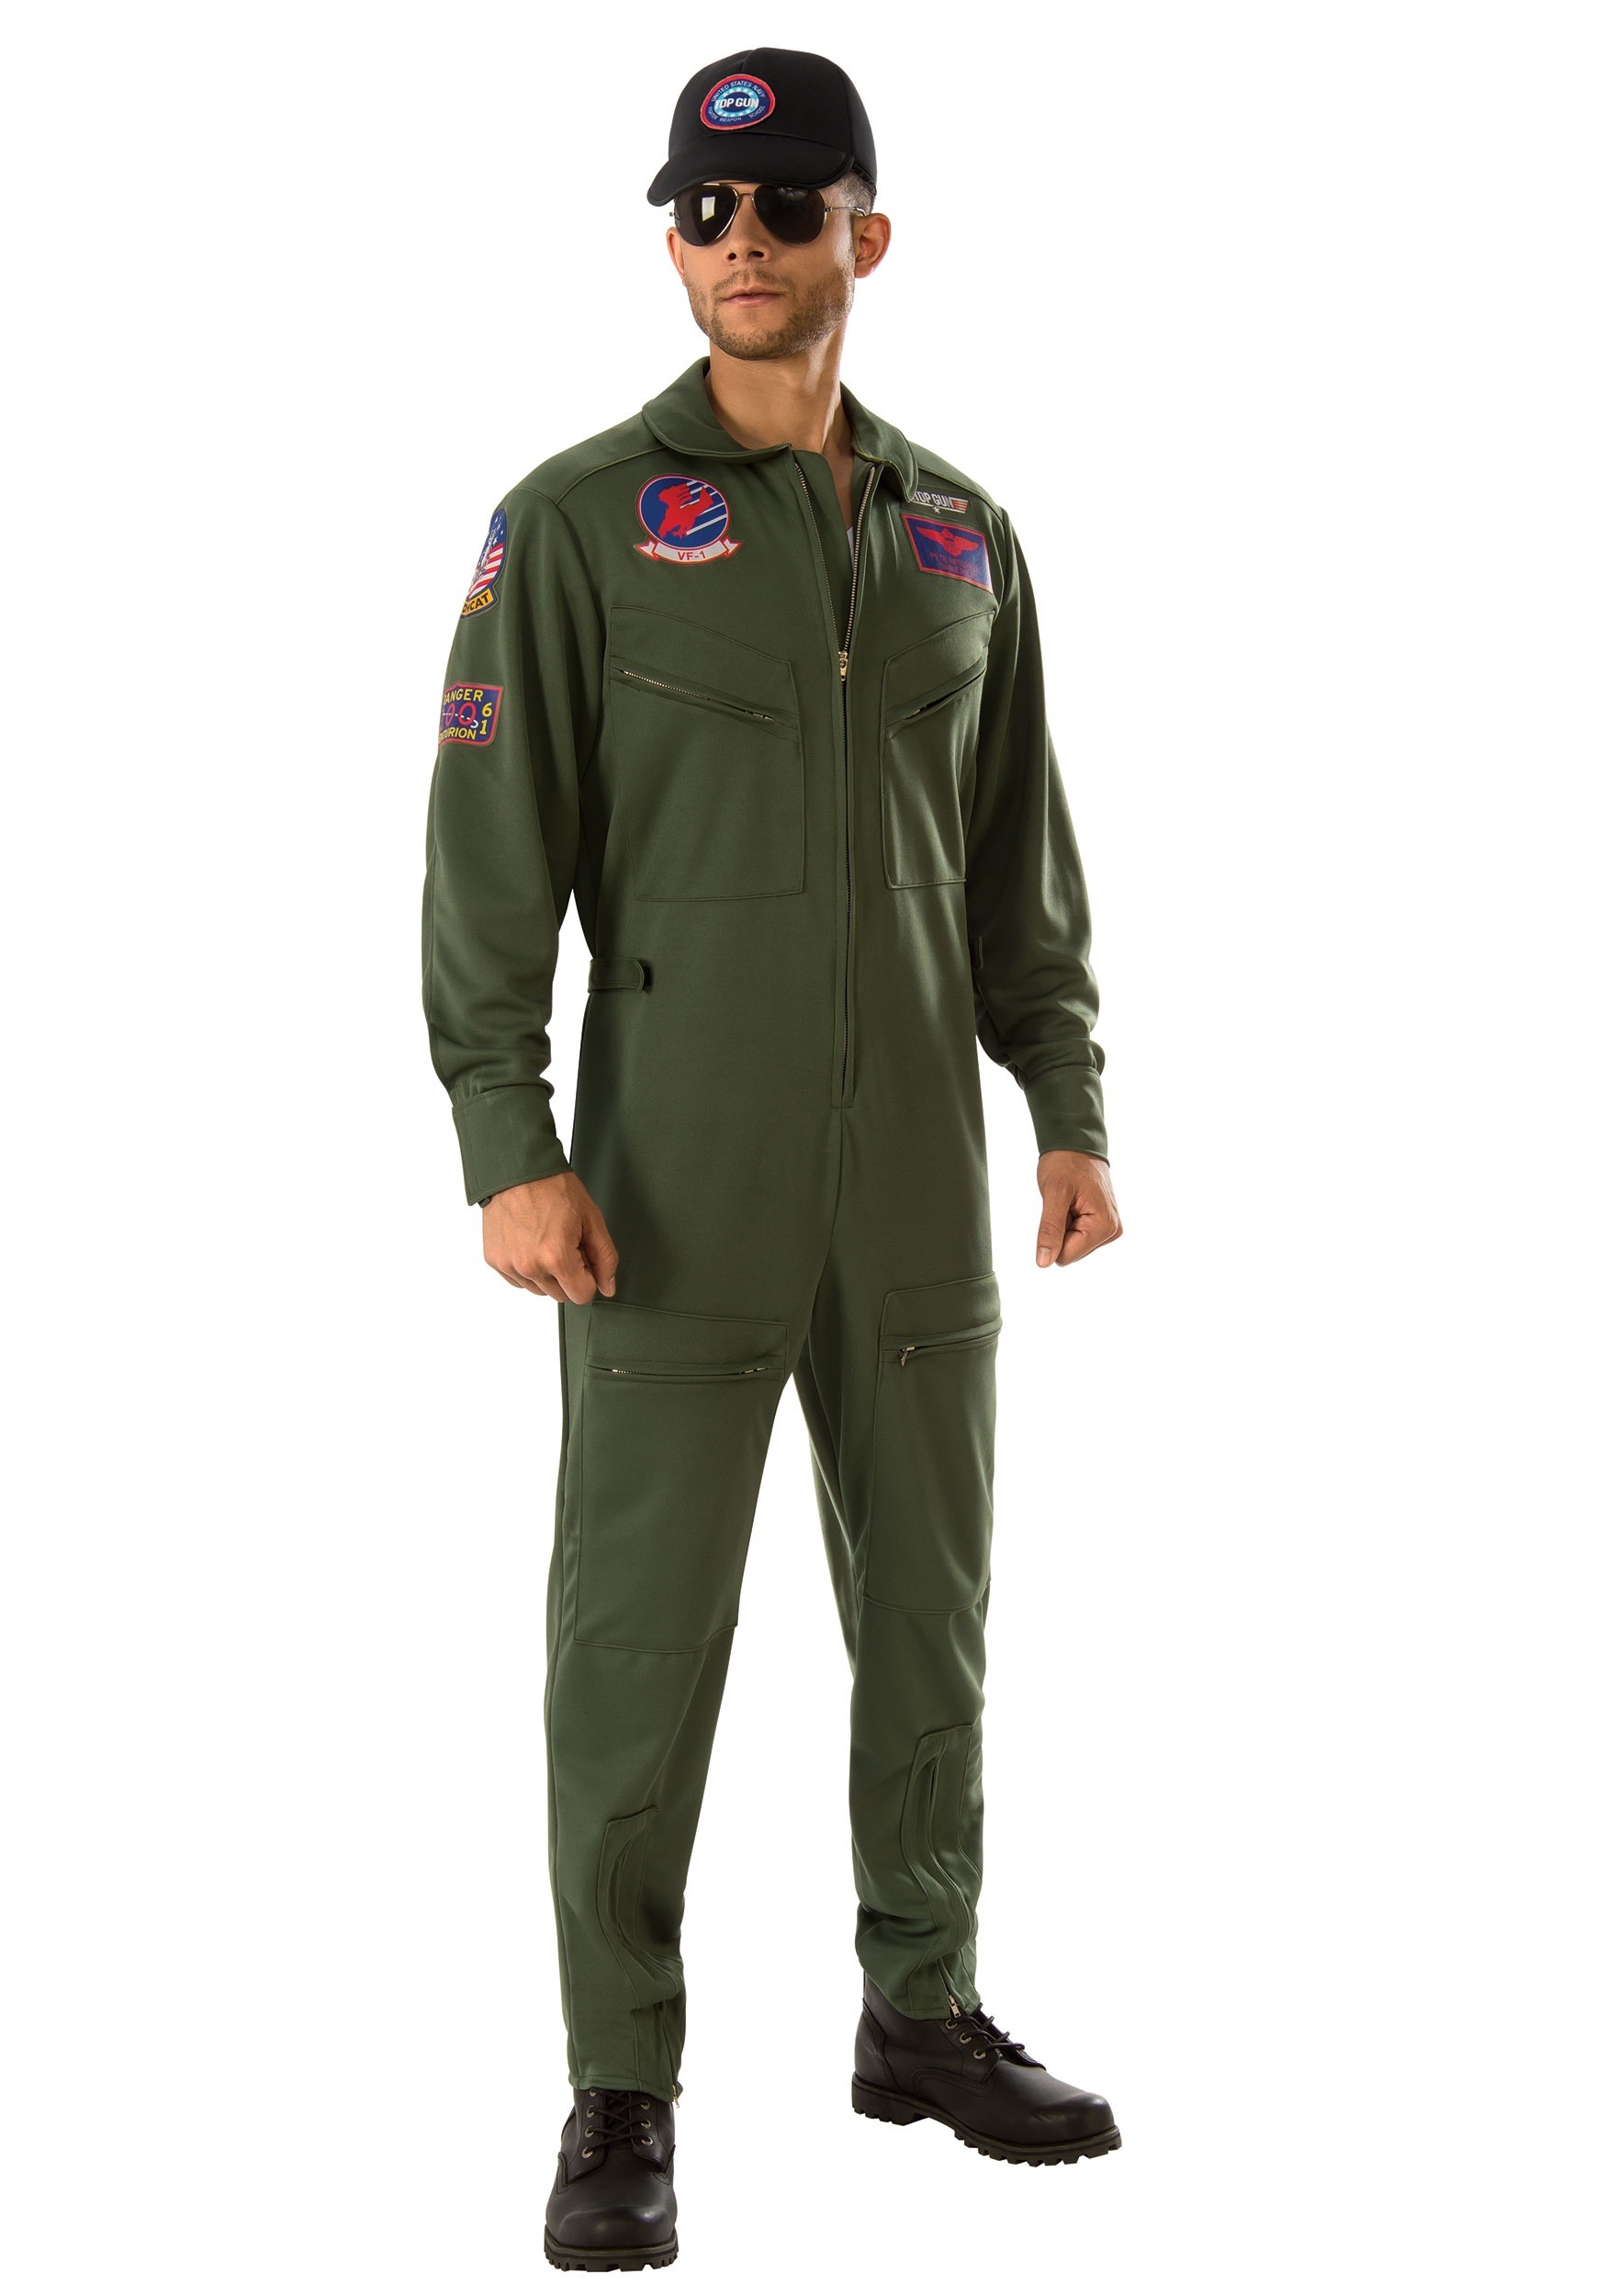 Image of Top Gun Men's Jumpsuit Costume | Fighter Pilot Costume ID RU821157-XL